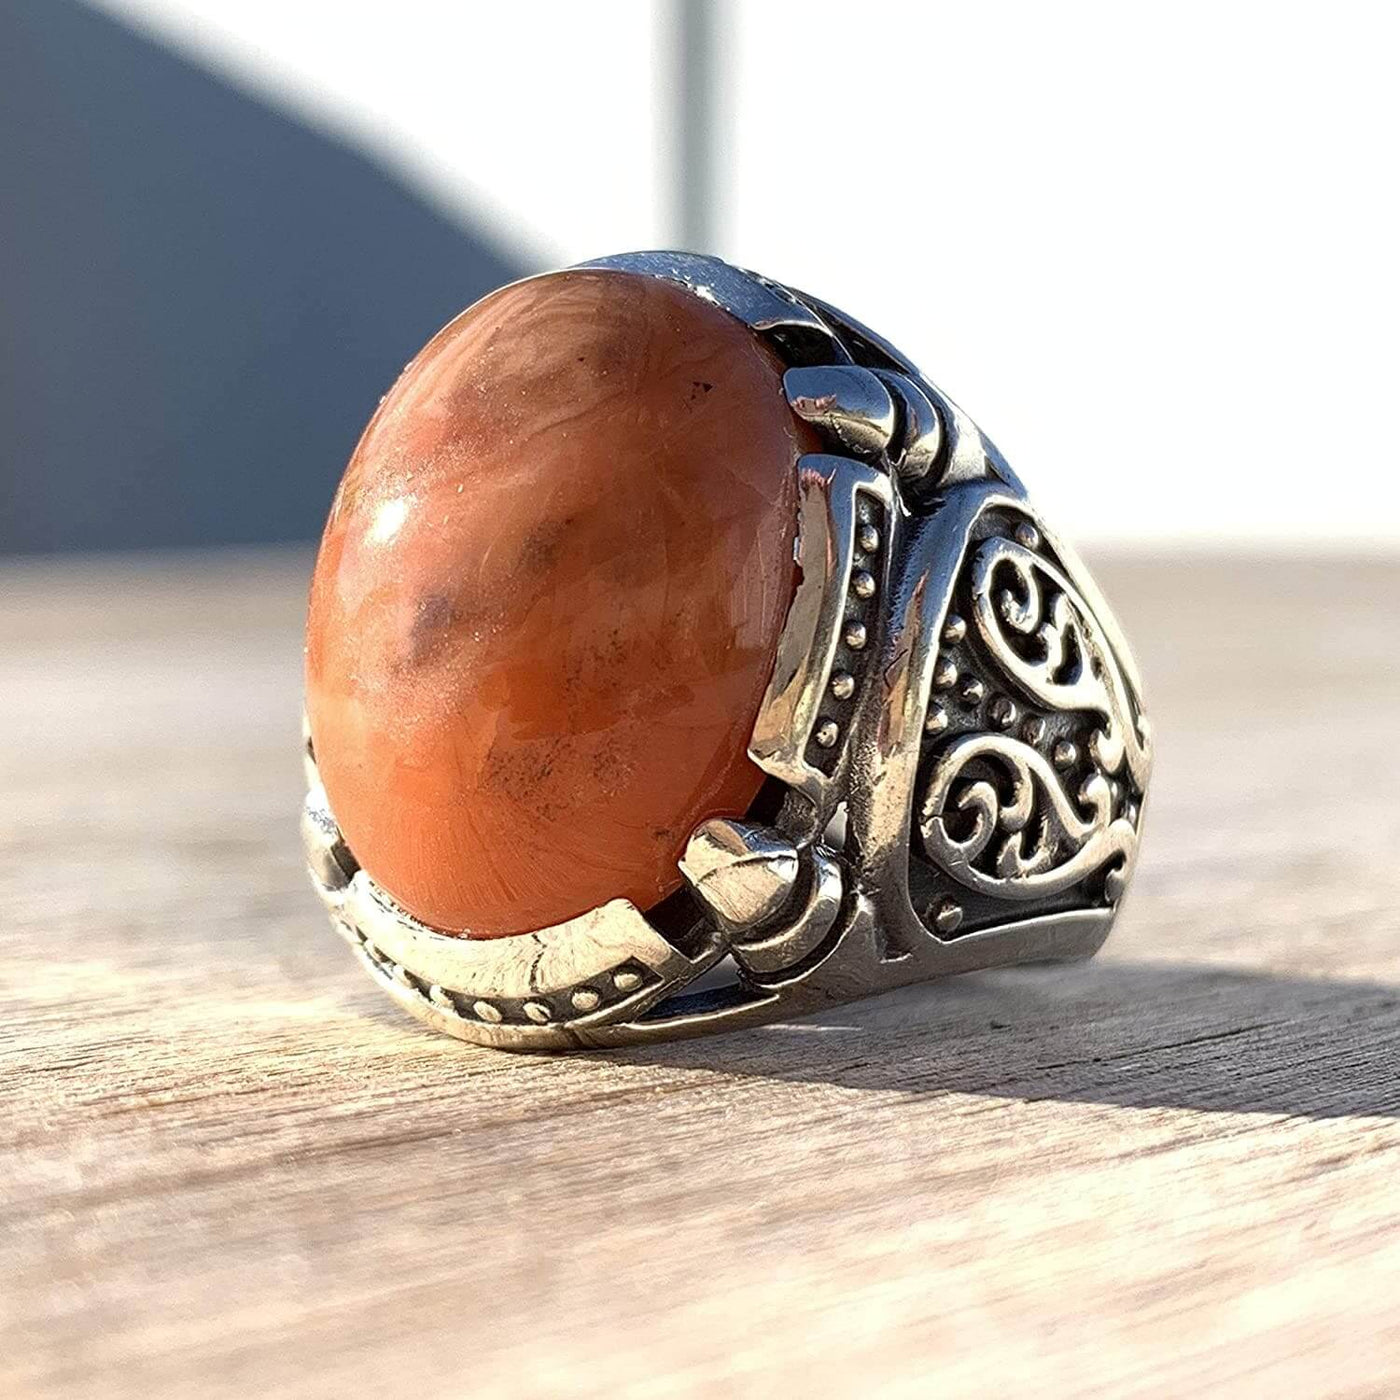 Rare Red Dur e Najaf Ring Silver | خاتم در النجف الاصلي | AlAliGems | Genuine Dur E Najaf Stone Ring | Dur Hussaini Size 11 - Al Ali Gems